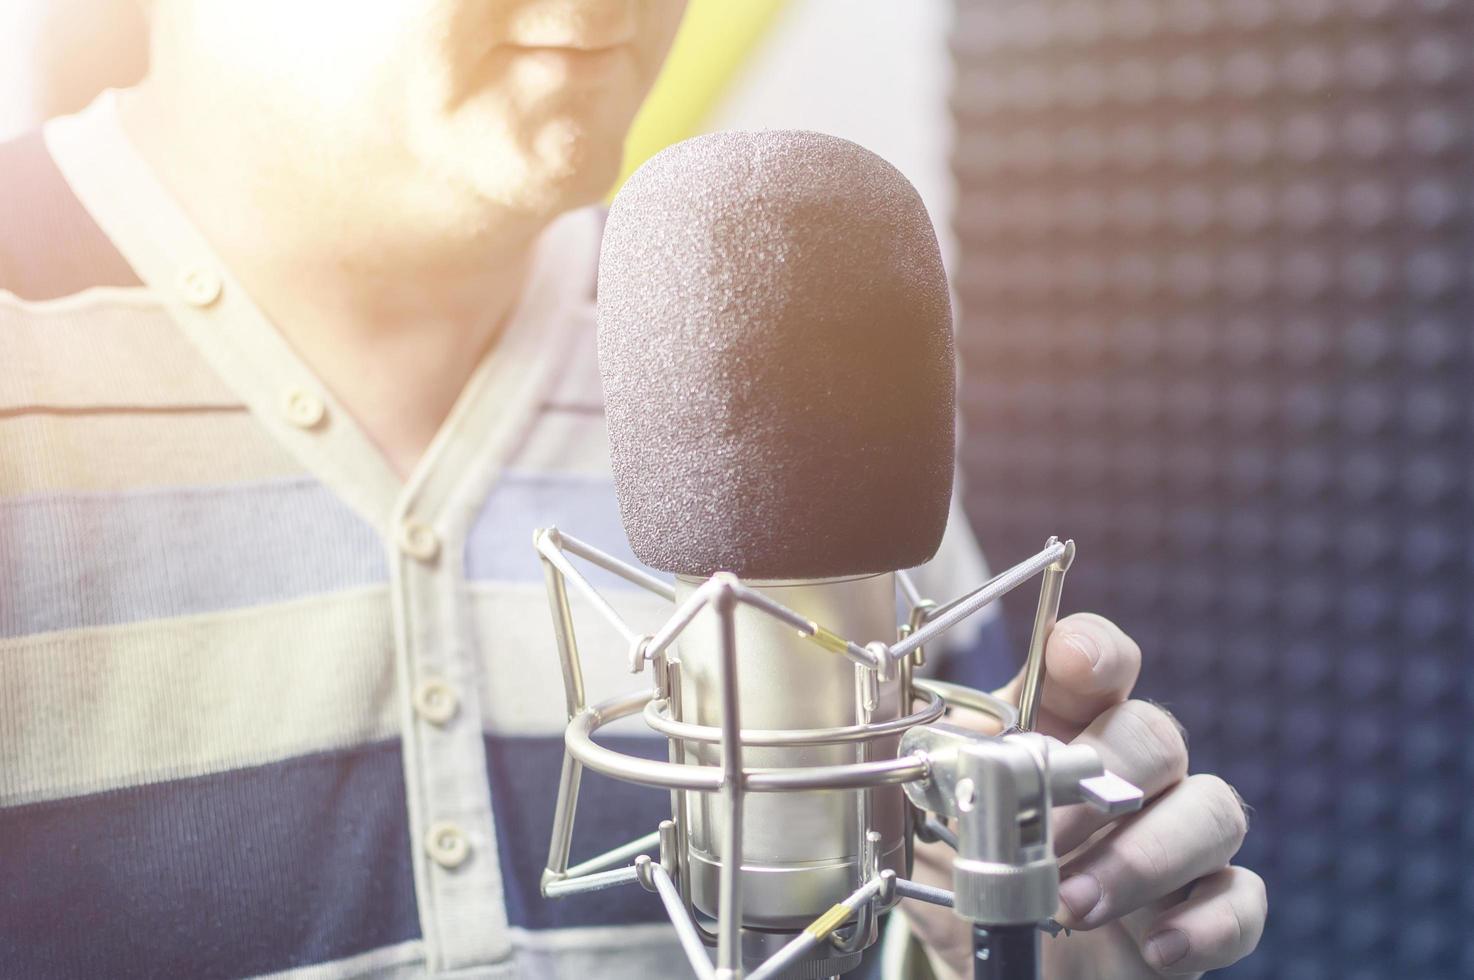 A man at a microphone in a recording Studio. Musical creativity. photo